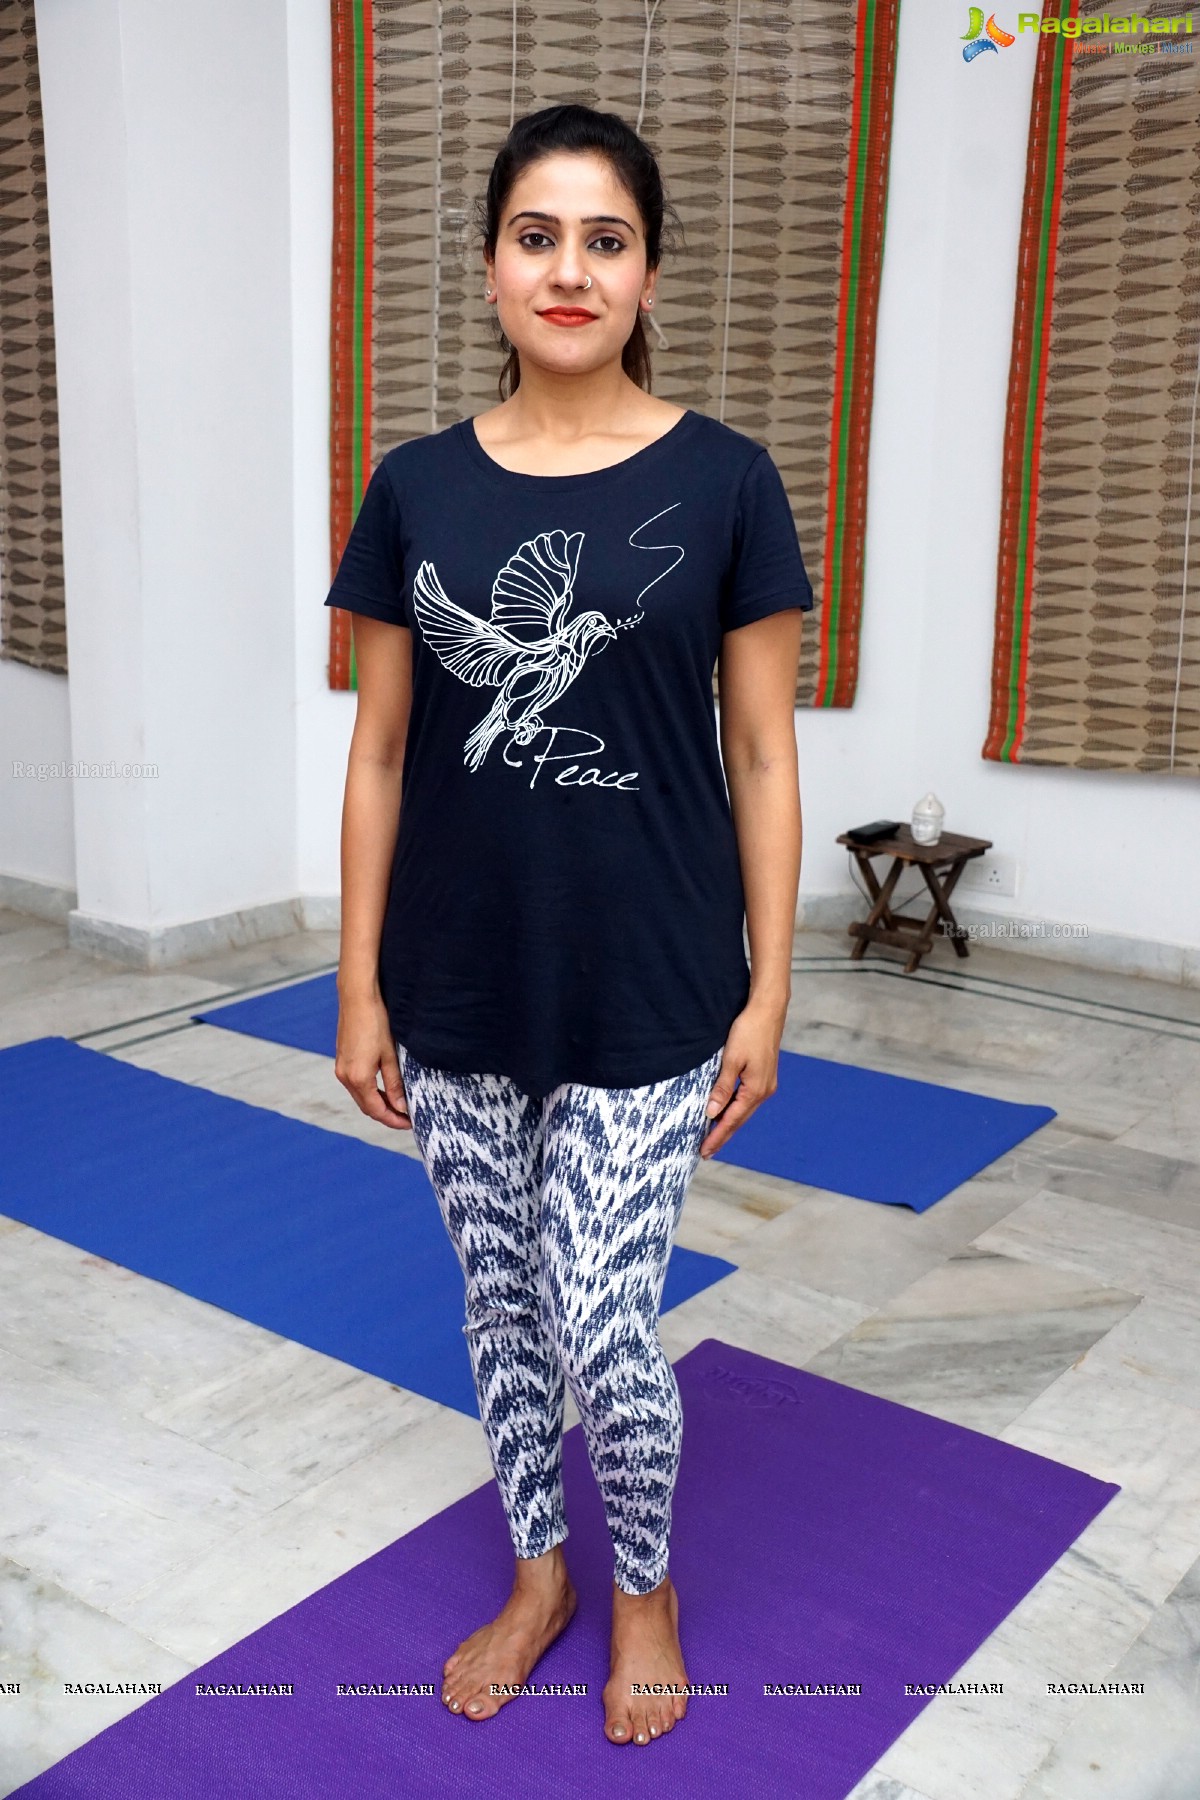 Yoga Session Training by Famous Fitness Expert Nisha Pushpavanam